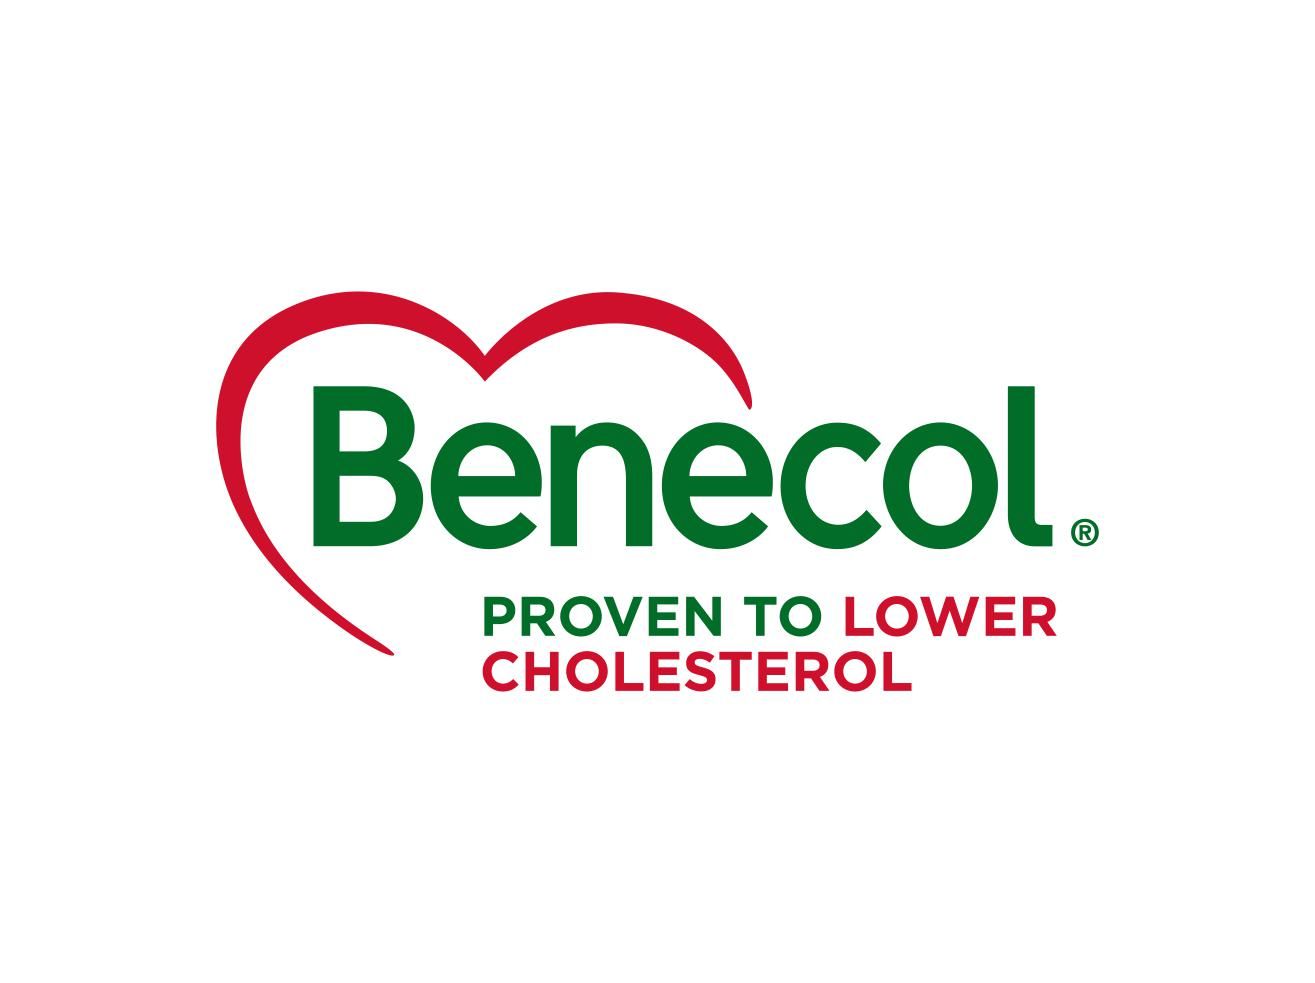 Benecol®